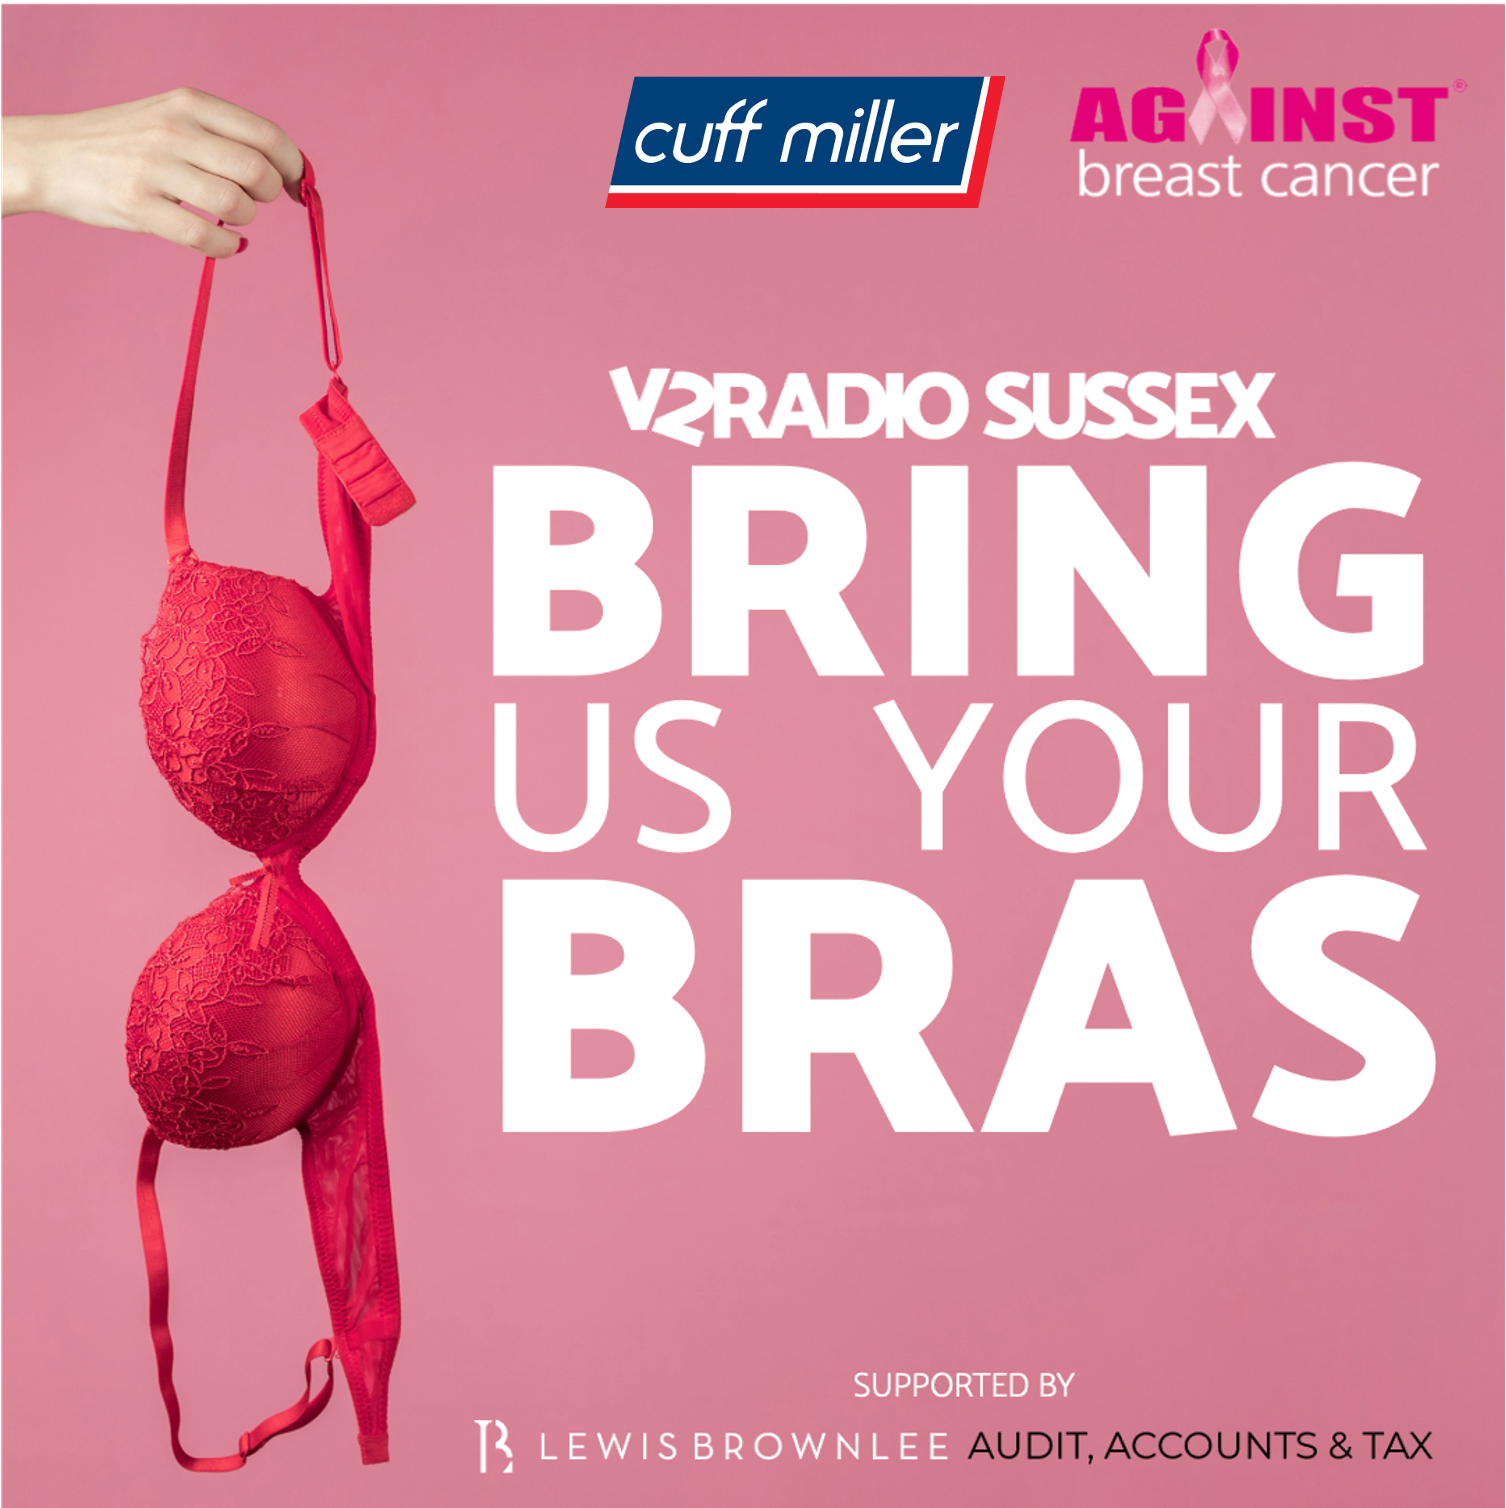 Bring Cuffs your bras! - Help us fight breast cancer! - Cuff